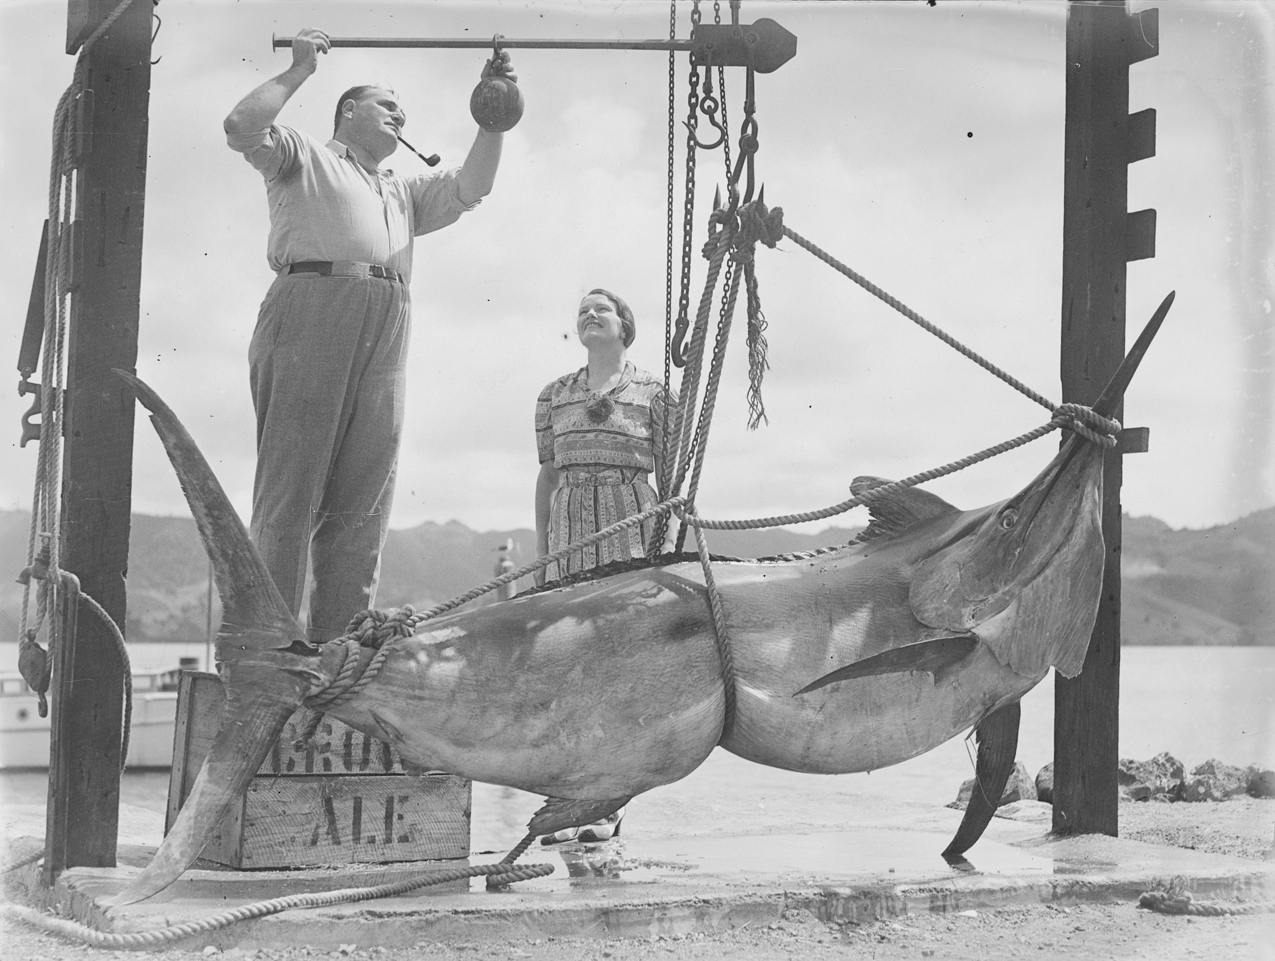 File:A man weighing a big game fish (AM 88313-1).jpg - Wikimedia